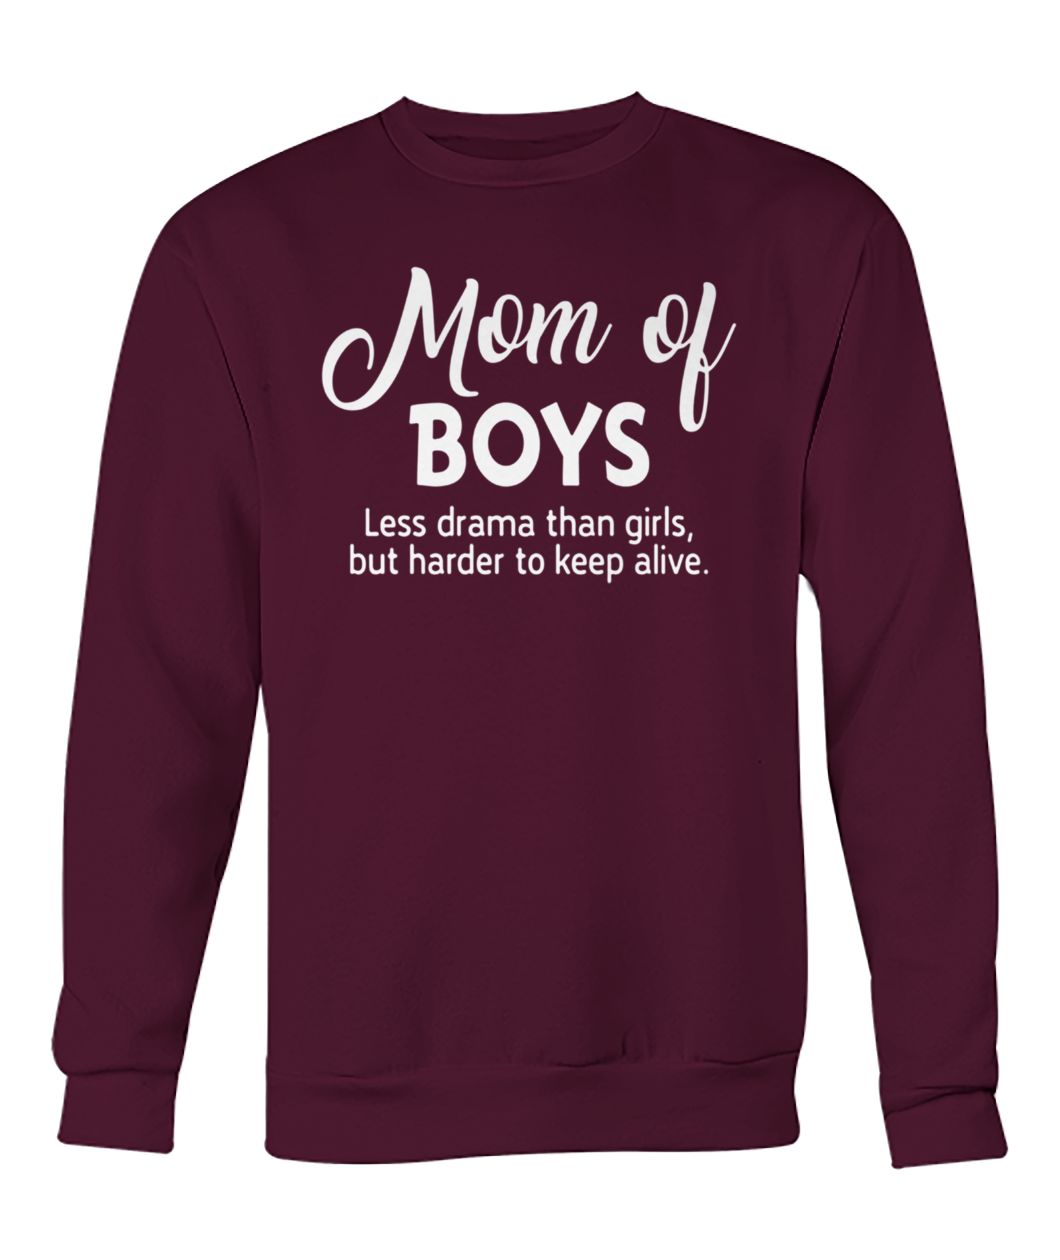 Mom of boys less drama than girls crew neck sweatshirt